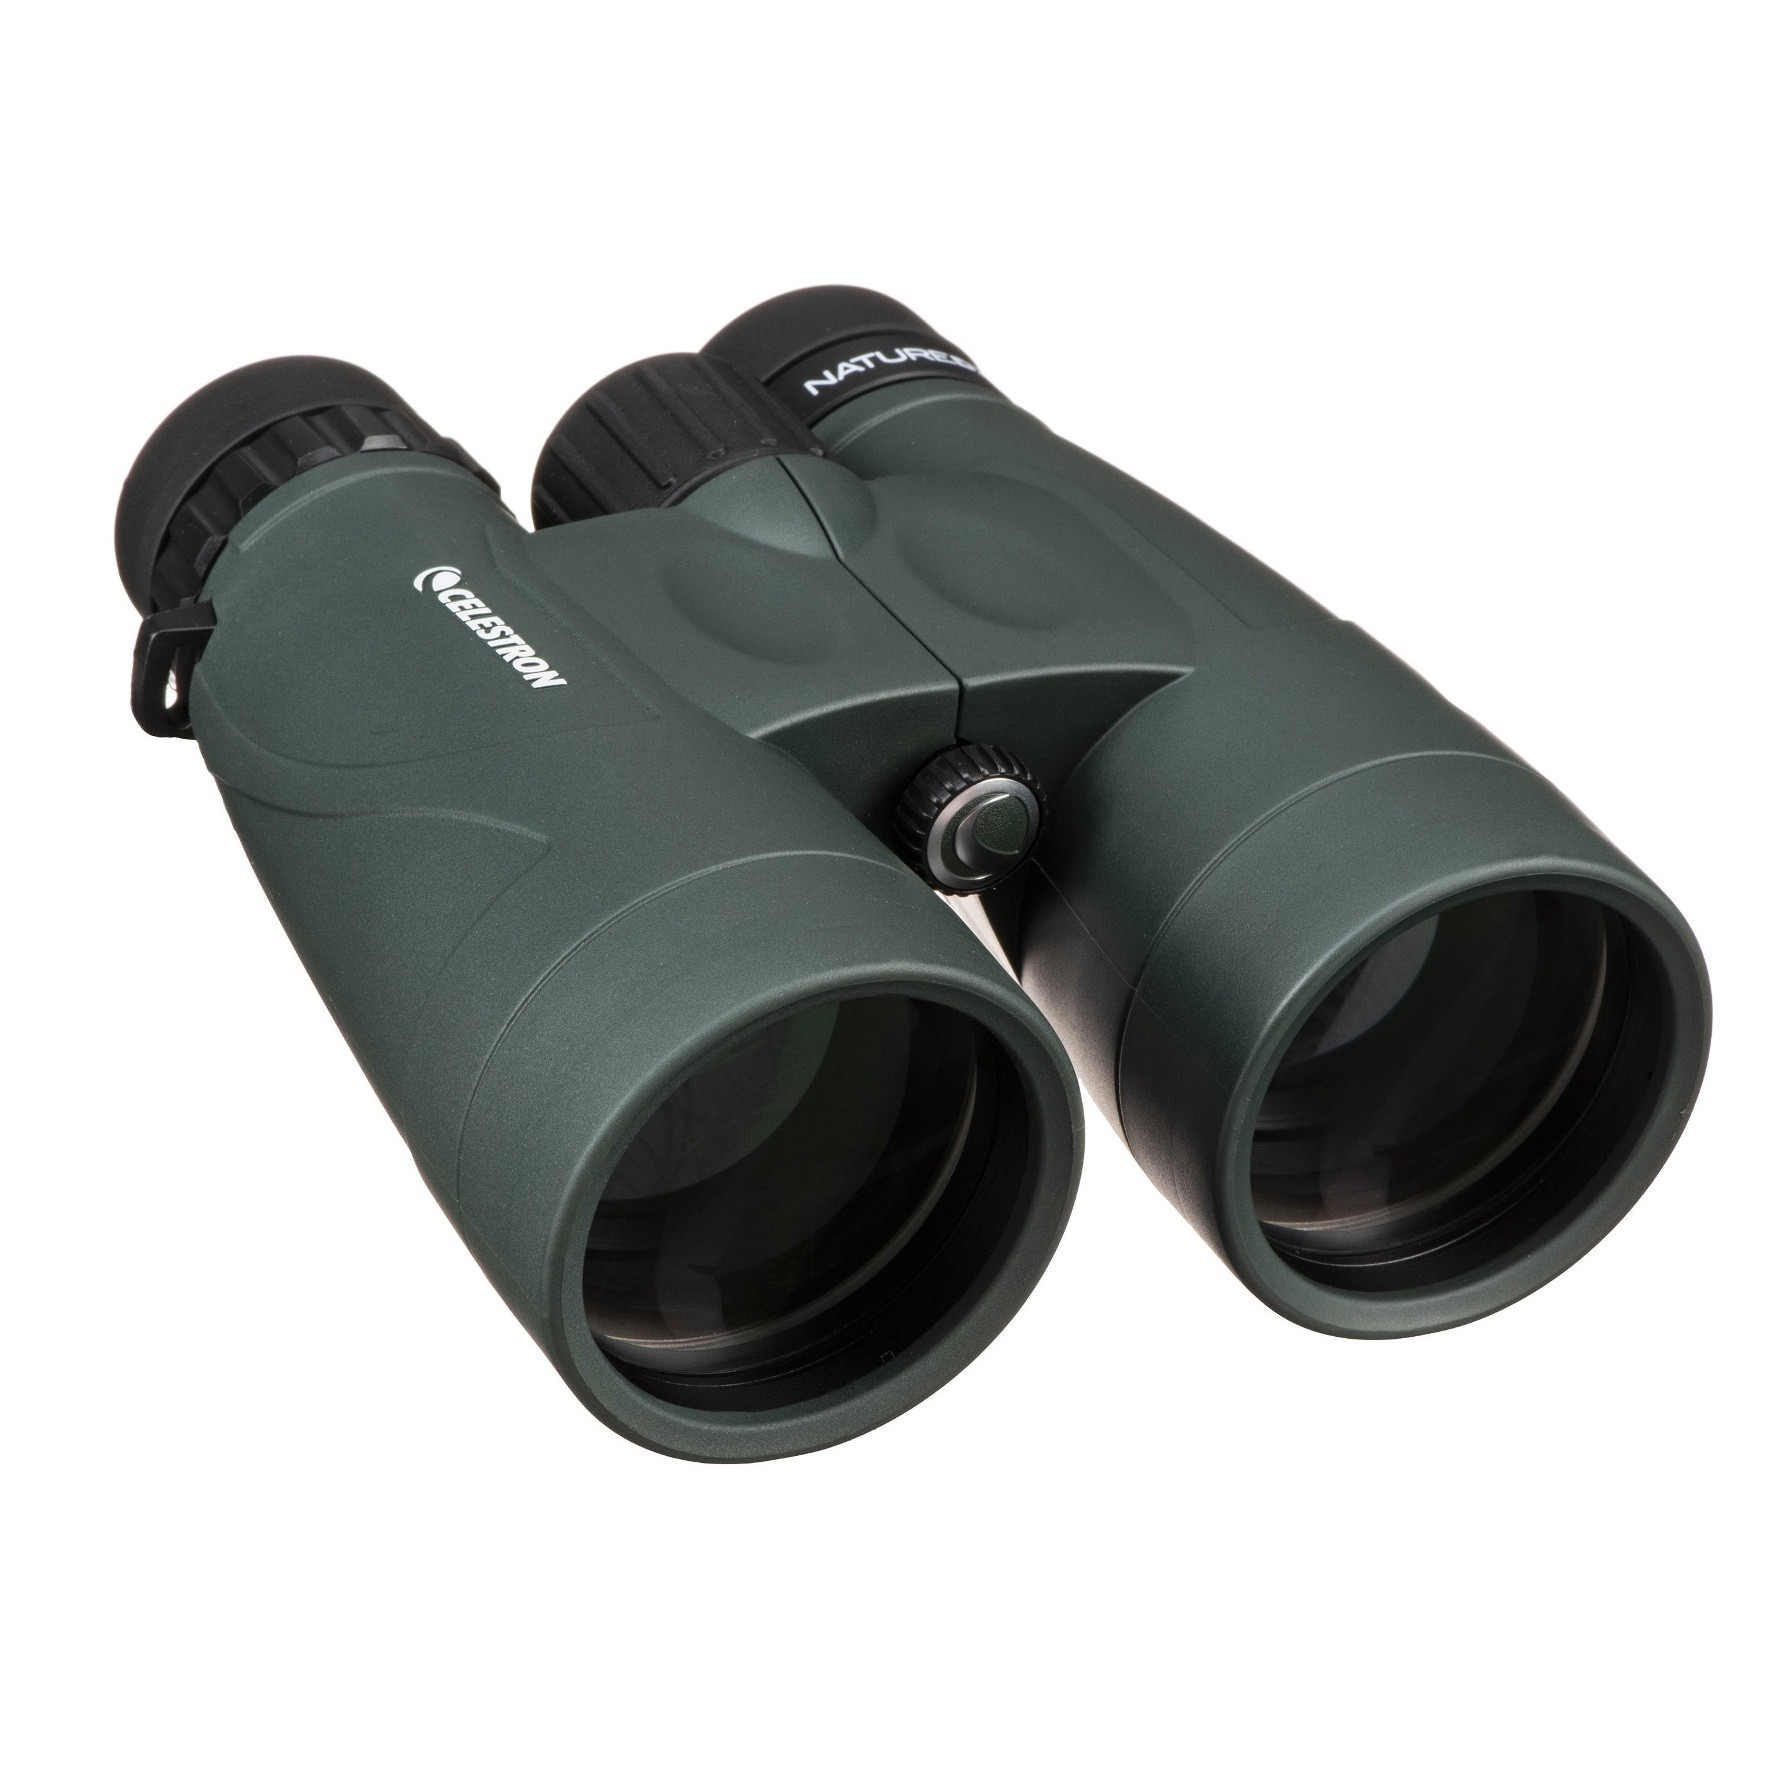 Celestron Nature DX 10x56 Binoculars